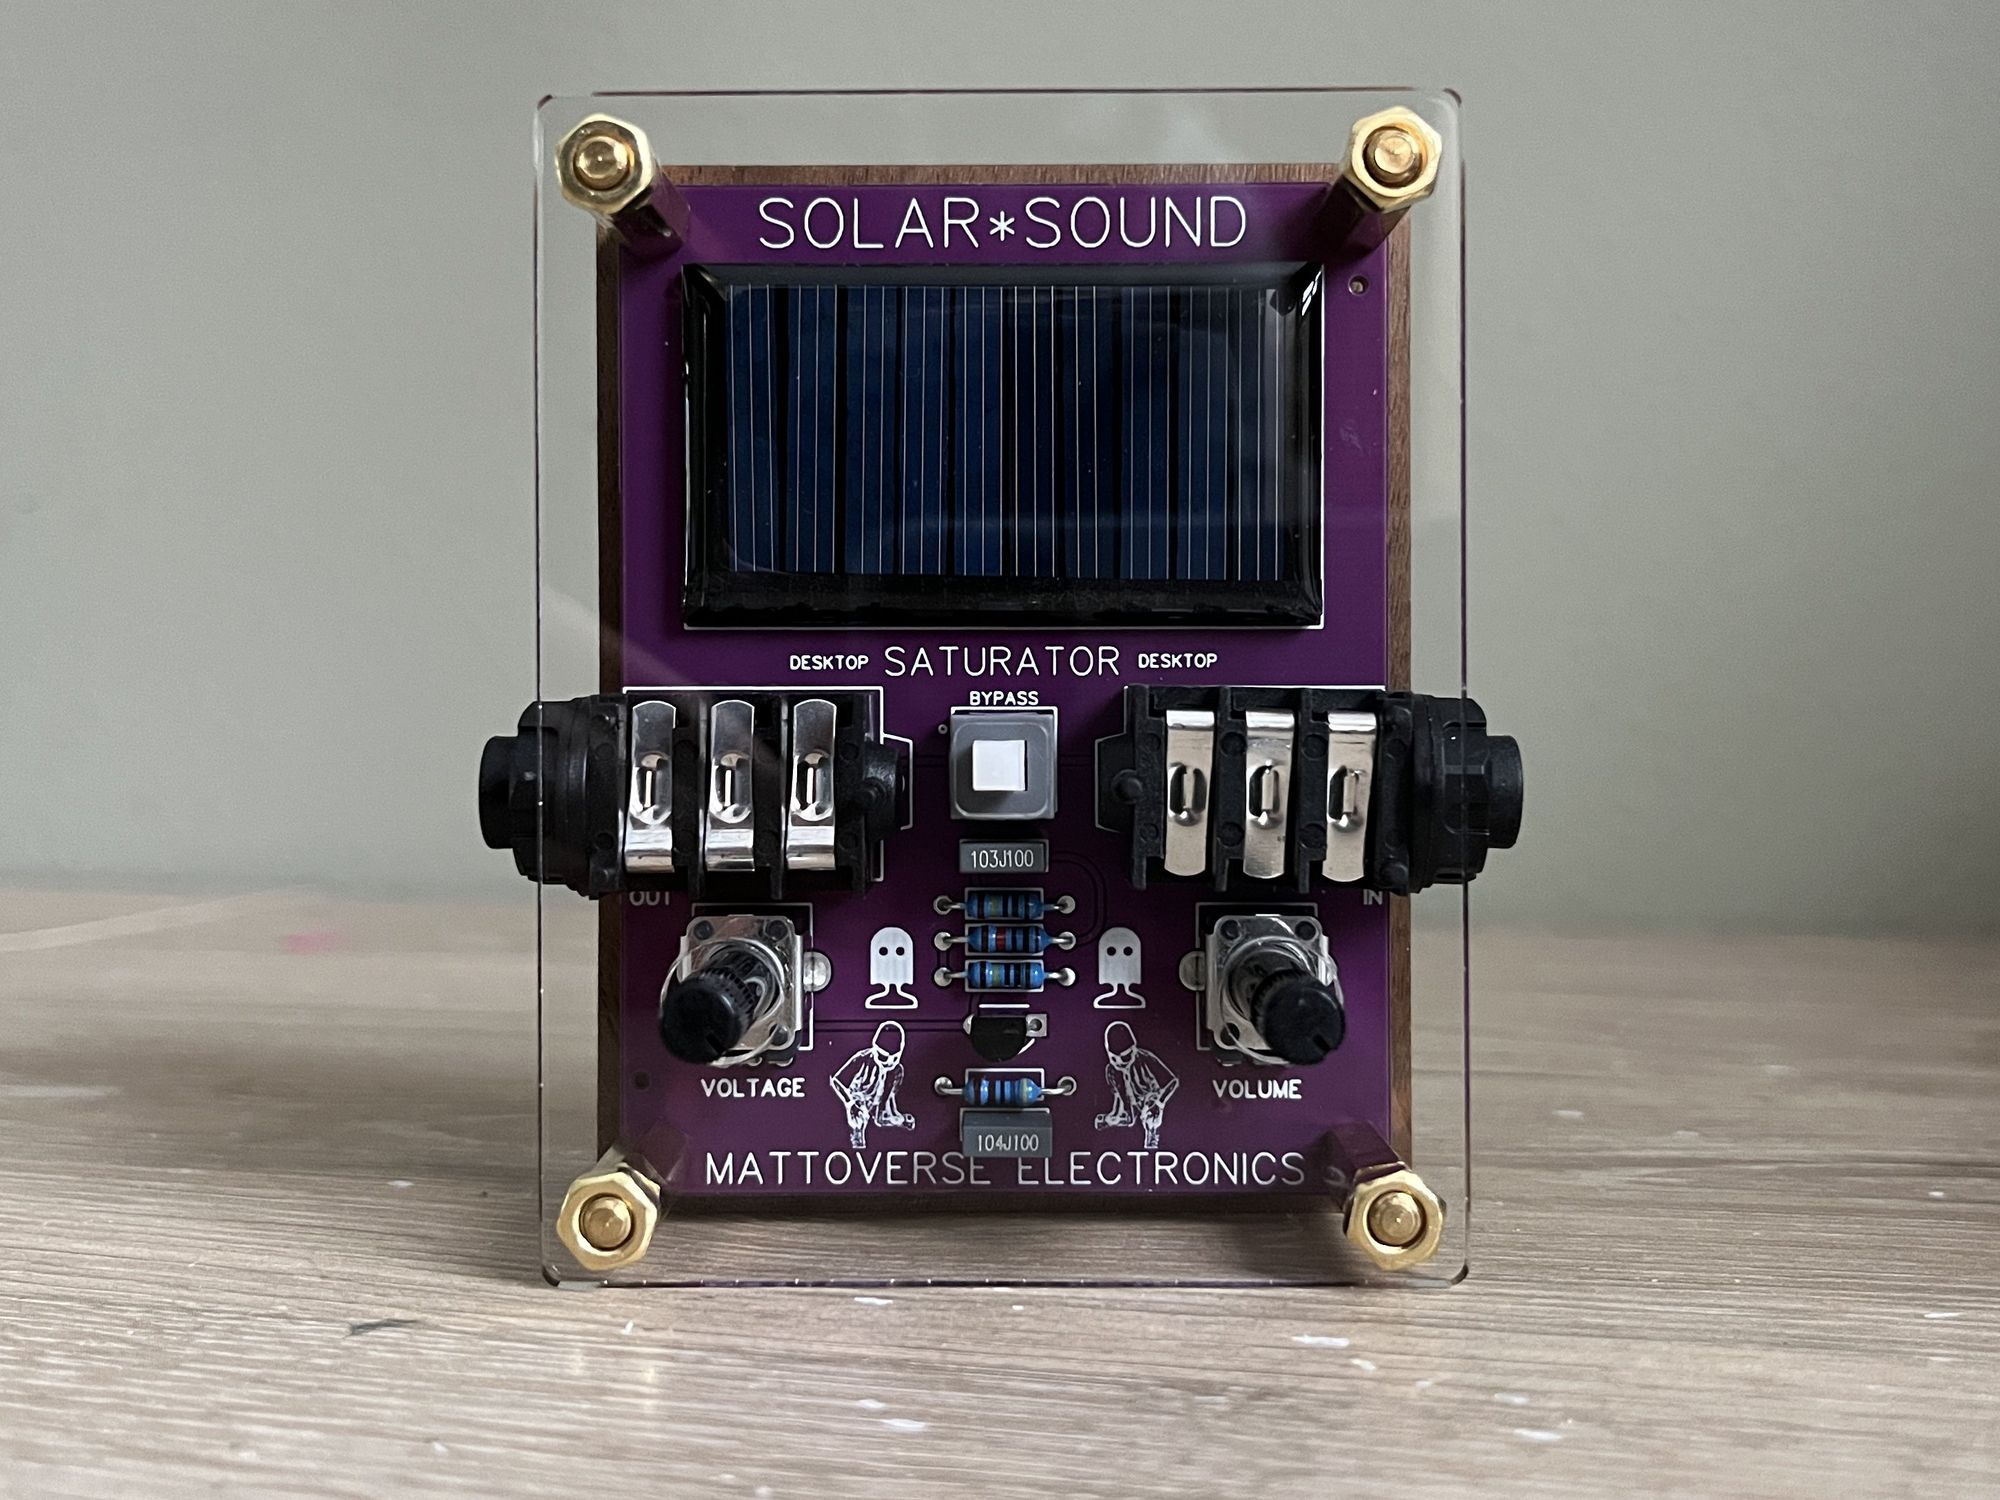 Mattoverse Electronics Releases the Solar Sound Desktop